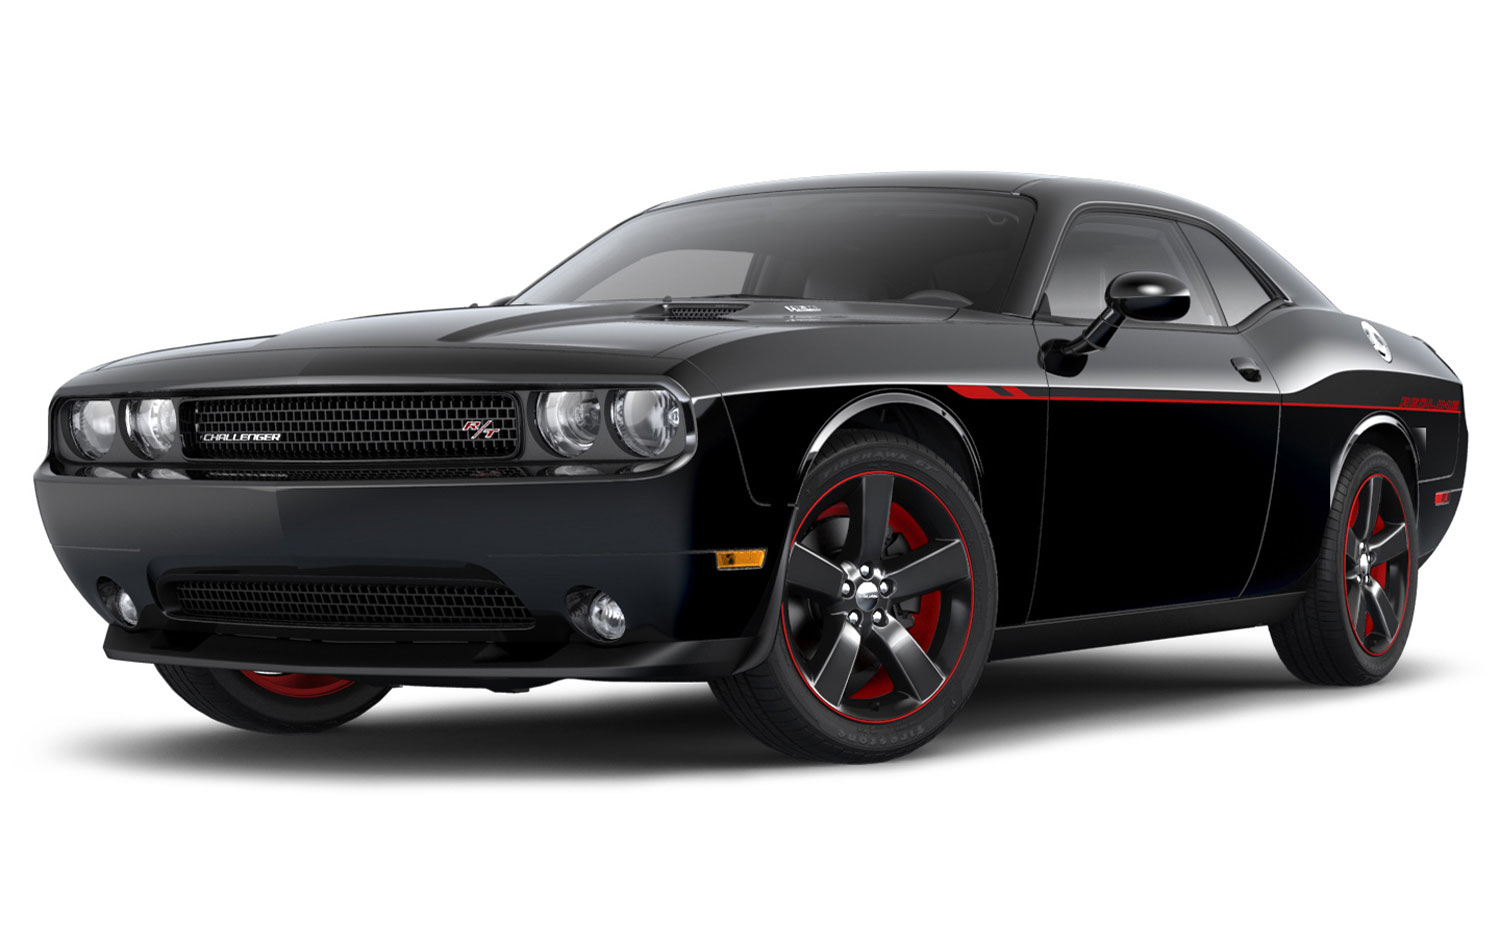 2013-Dodge-Challenger-RT-Redline-front-view-in-black.jpg